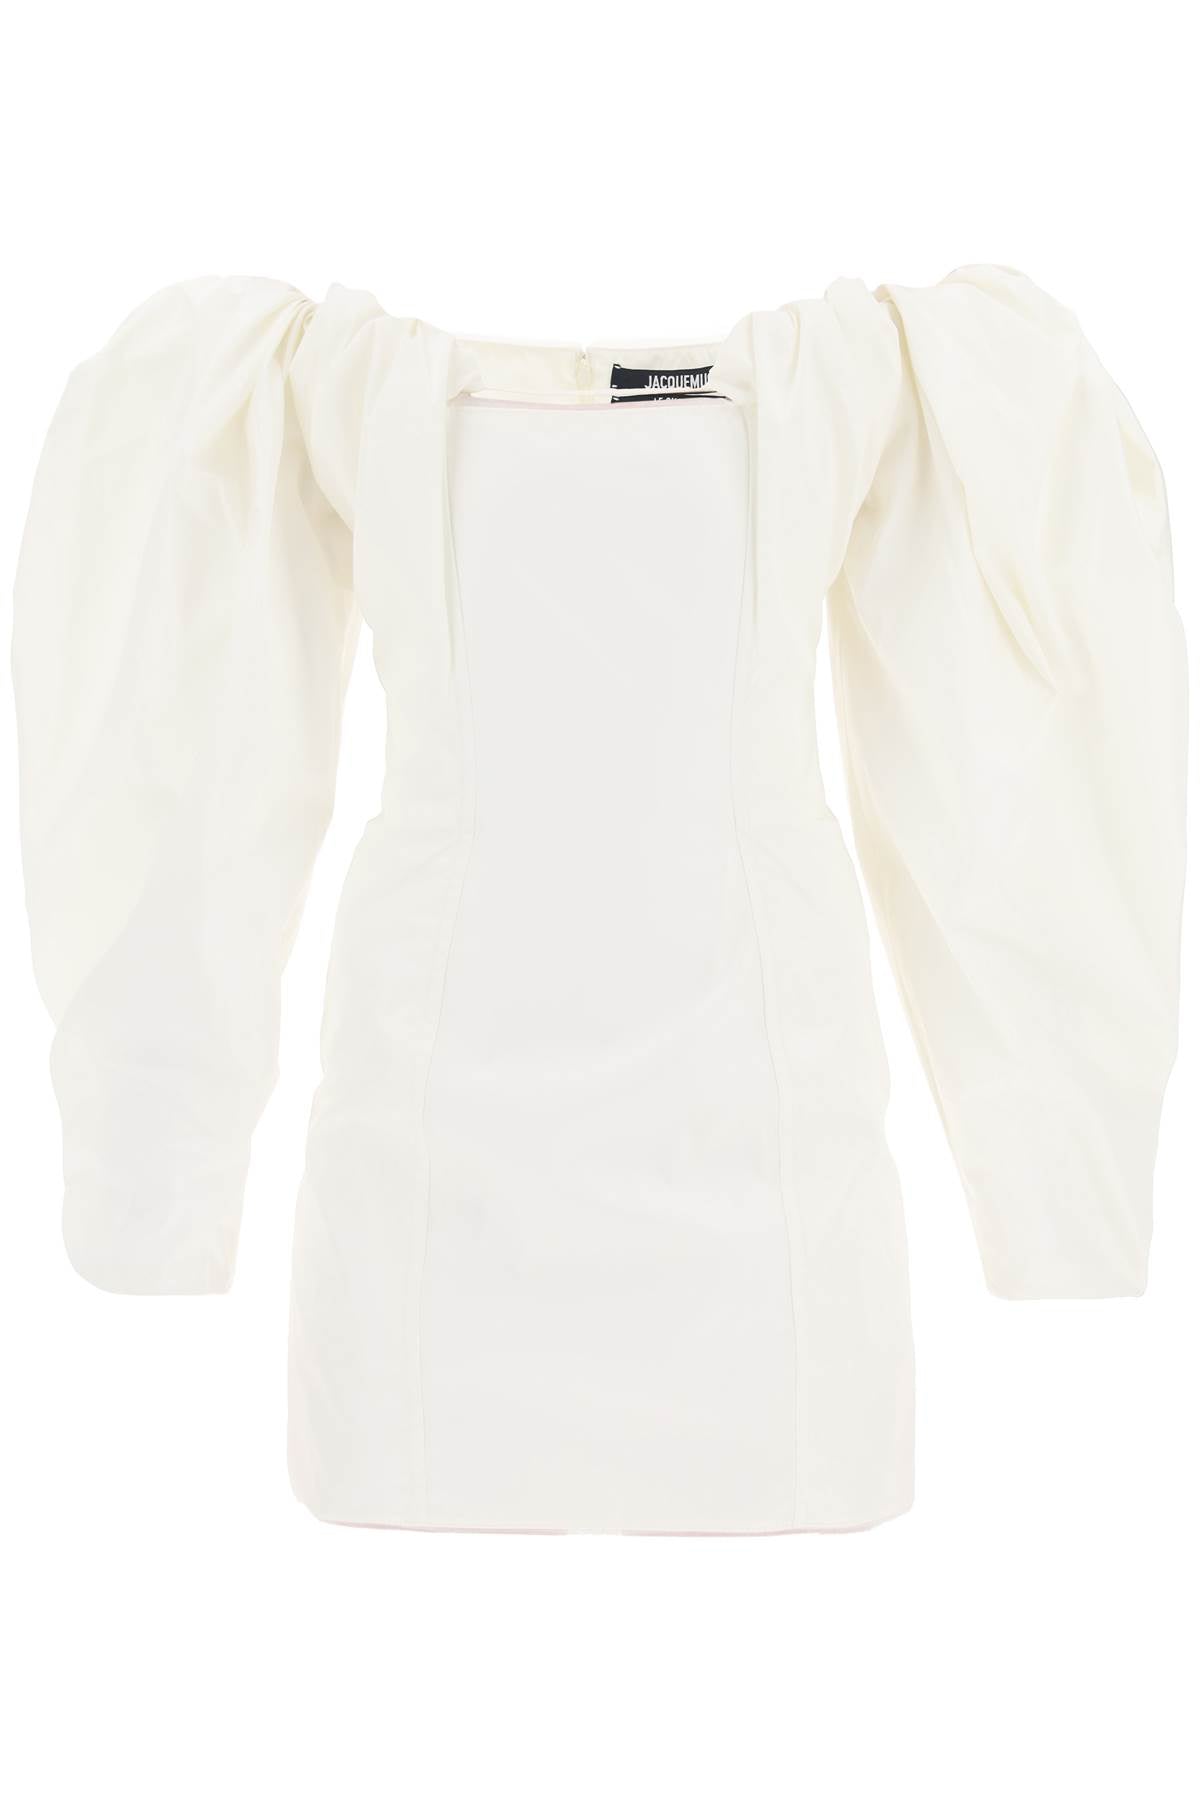 Jacquemus la robe taffetas mini dress 233DR062 1472 OFF WHITE